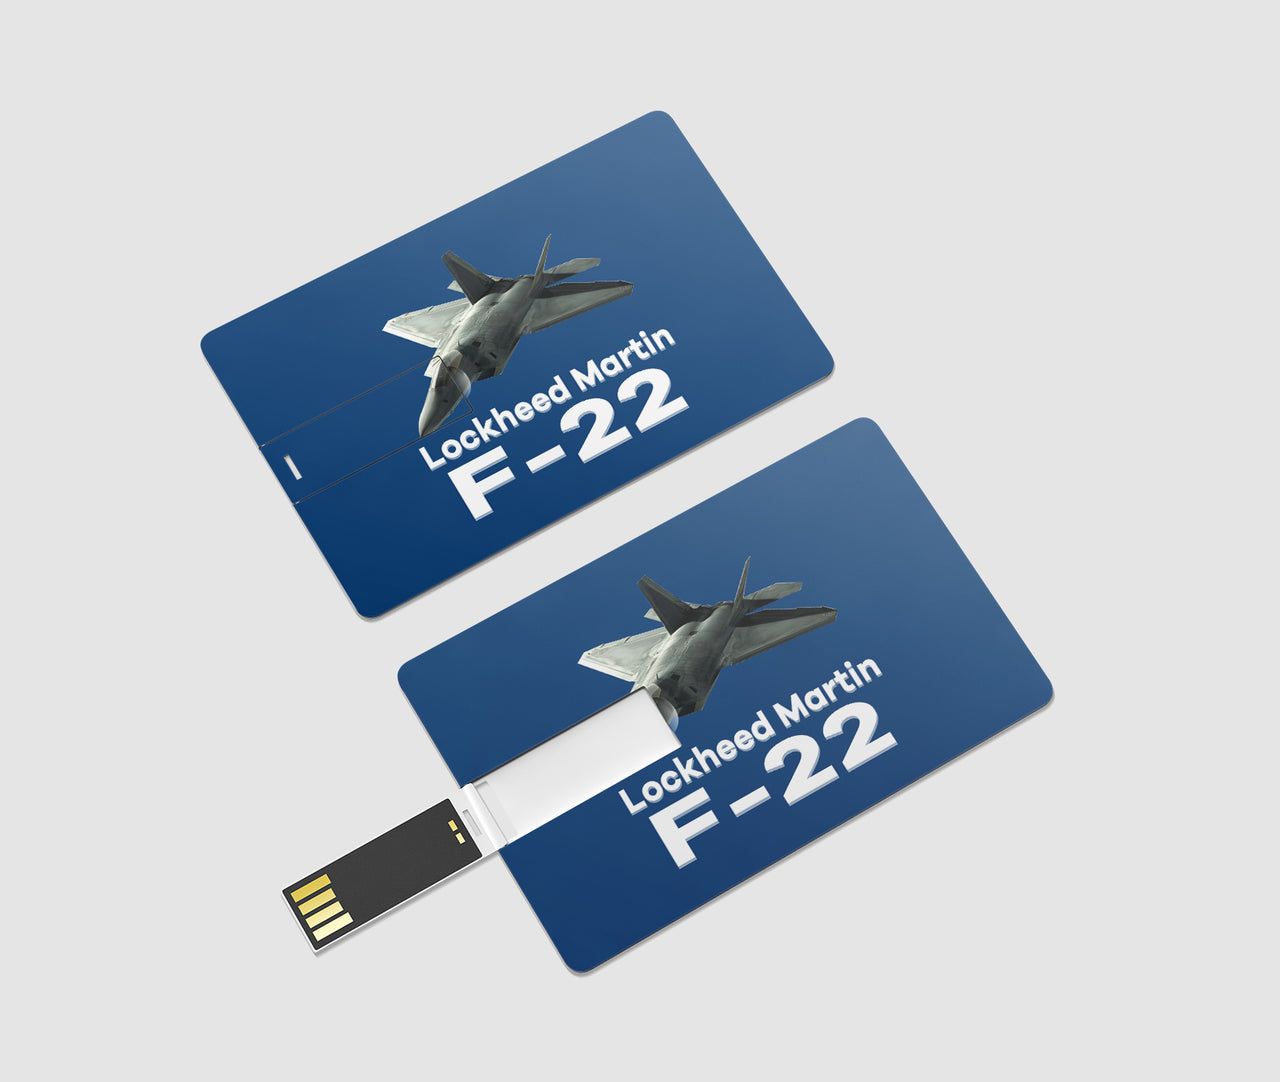 The Lockheed Martin F22 Designed USB Cards